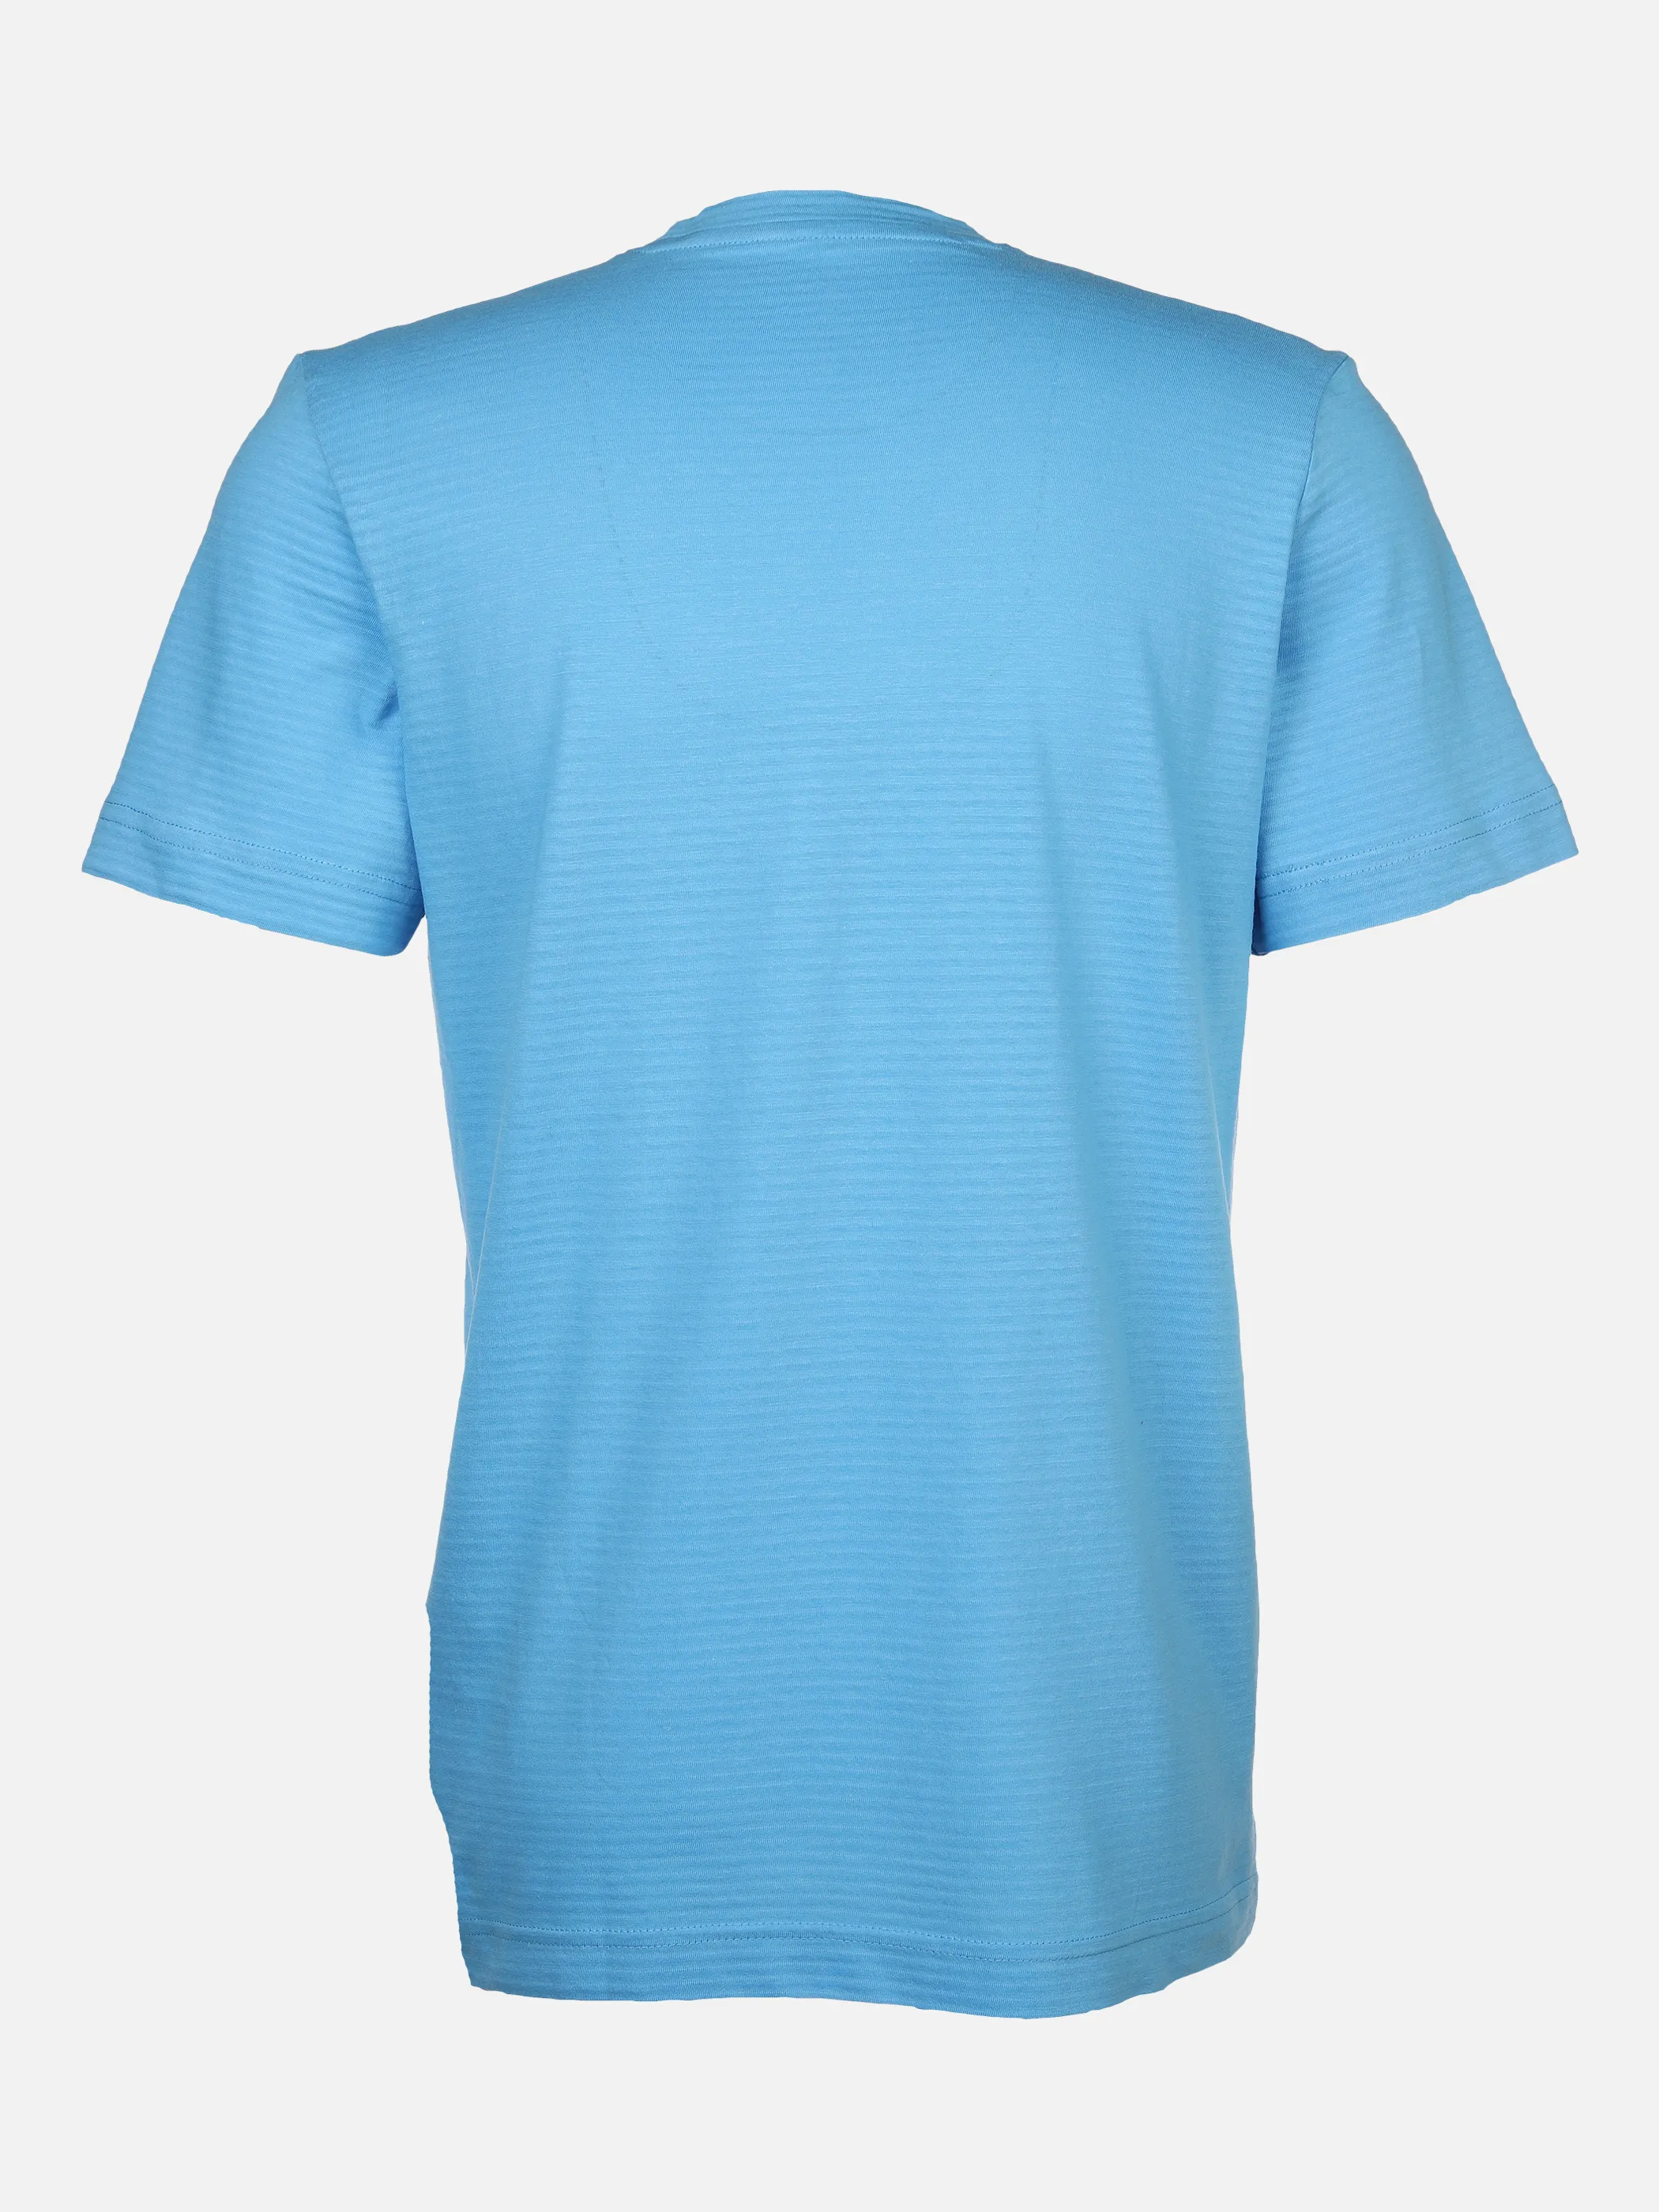 Tom Tailor 1036319 basic t-shirt with pocket Blau 880551 18395 2